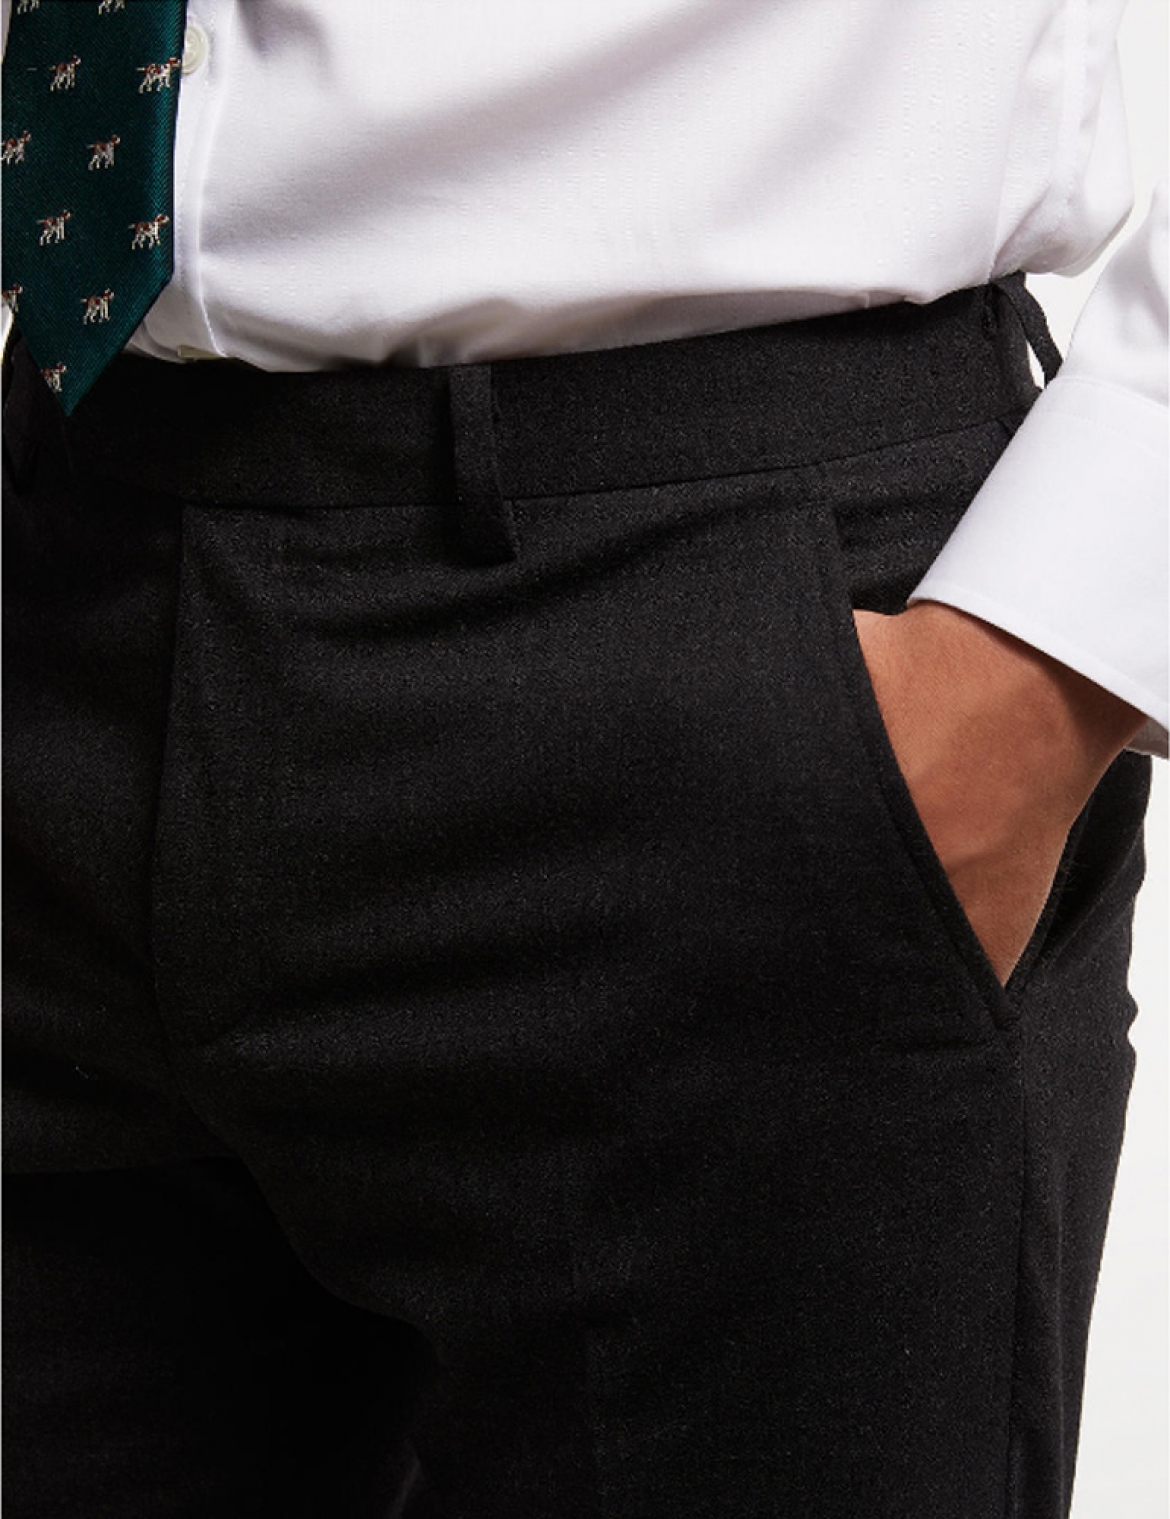 Men's pants,  Charcoal